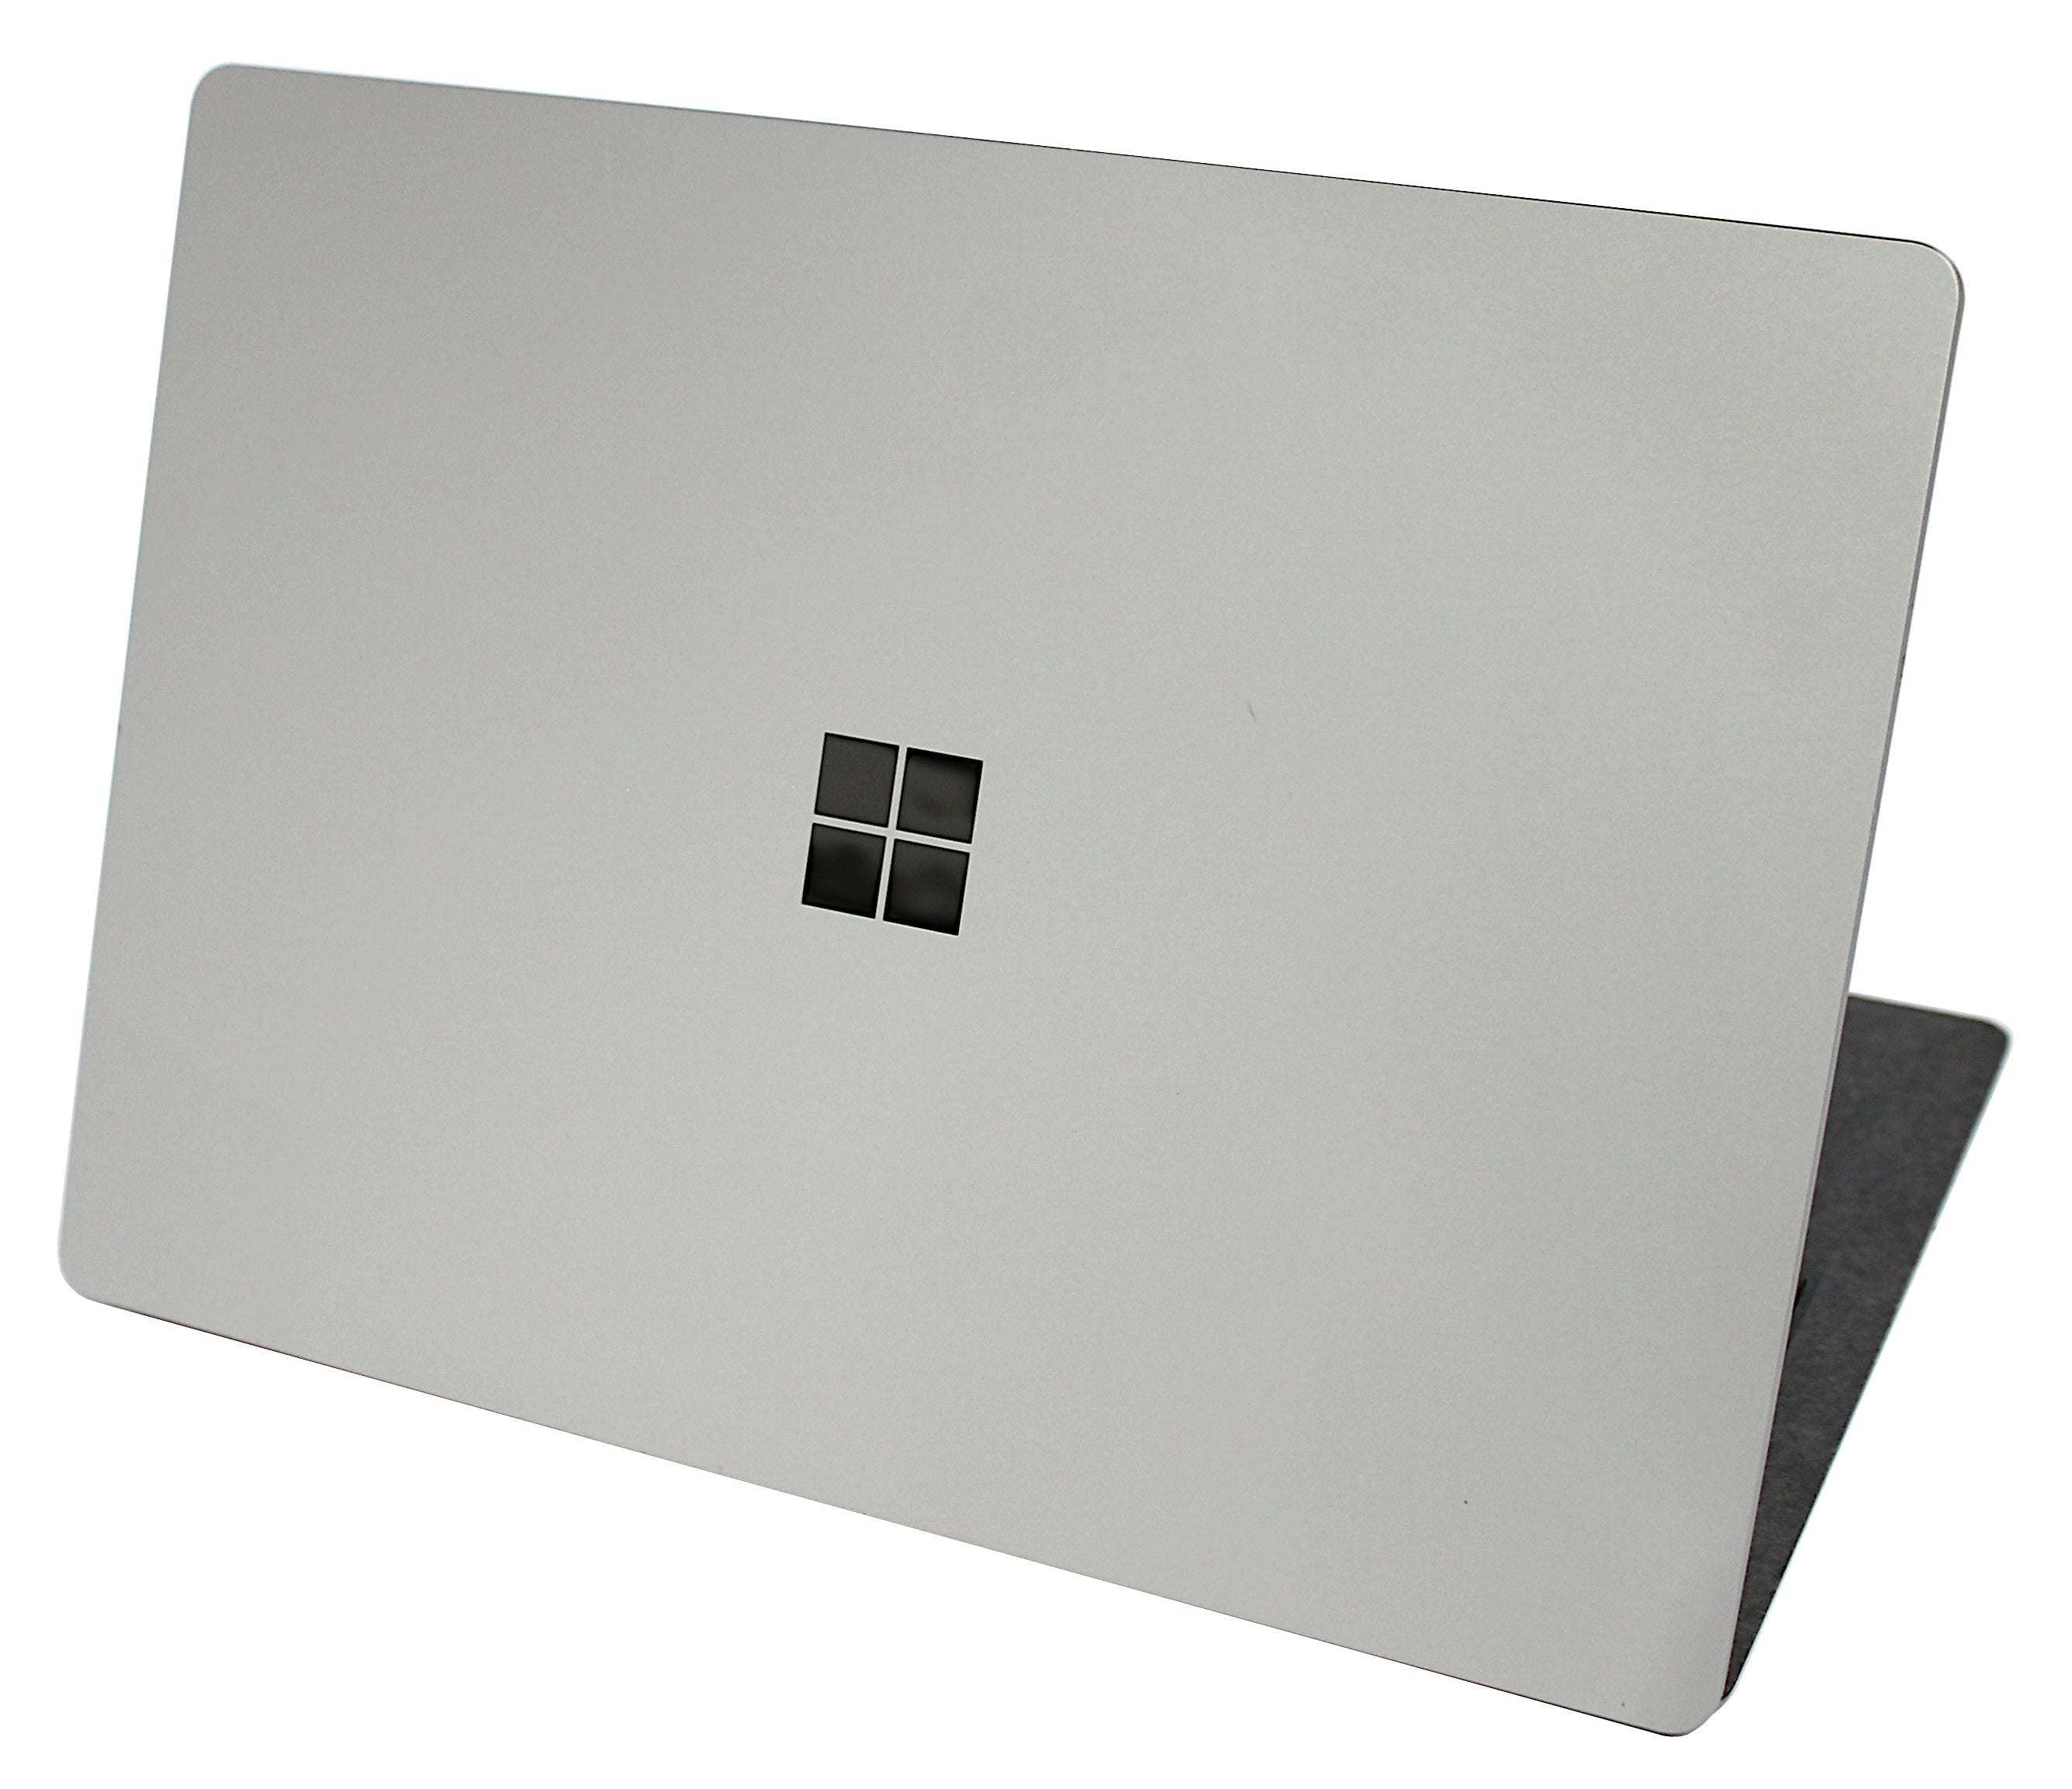 Microsoft Surface Laptop 3, 13" Intel Core i5, 8GB RAM, 128GB SSD